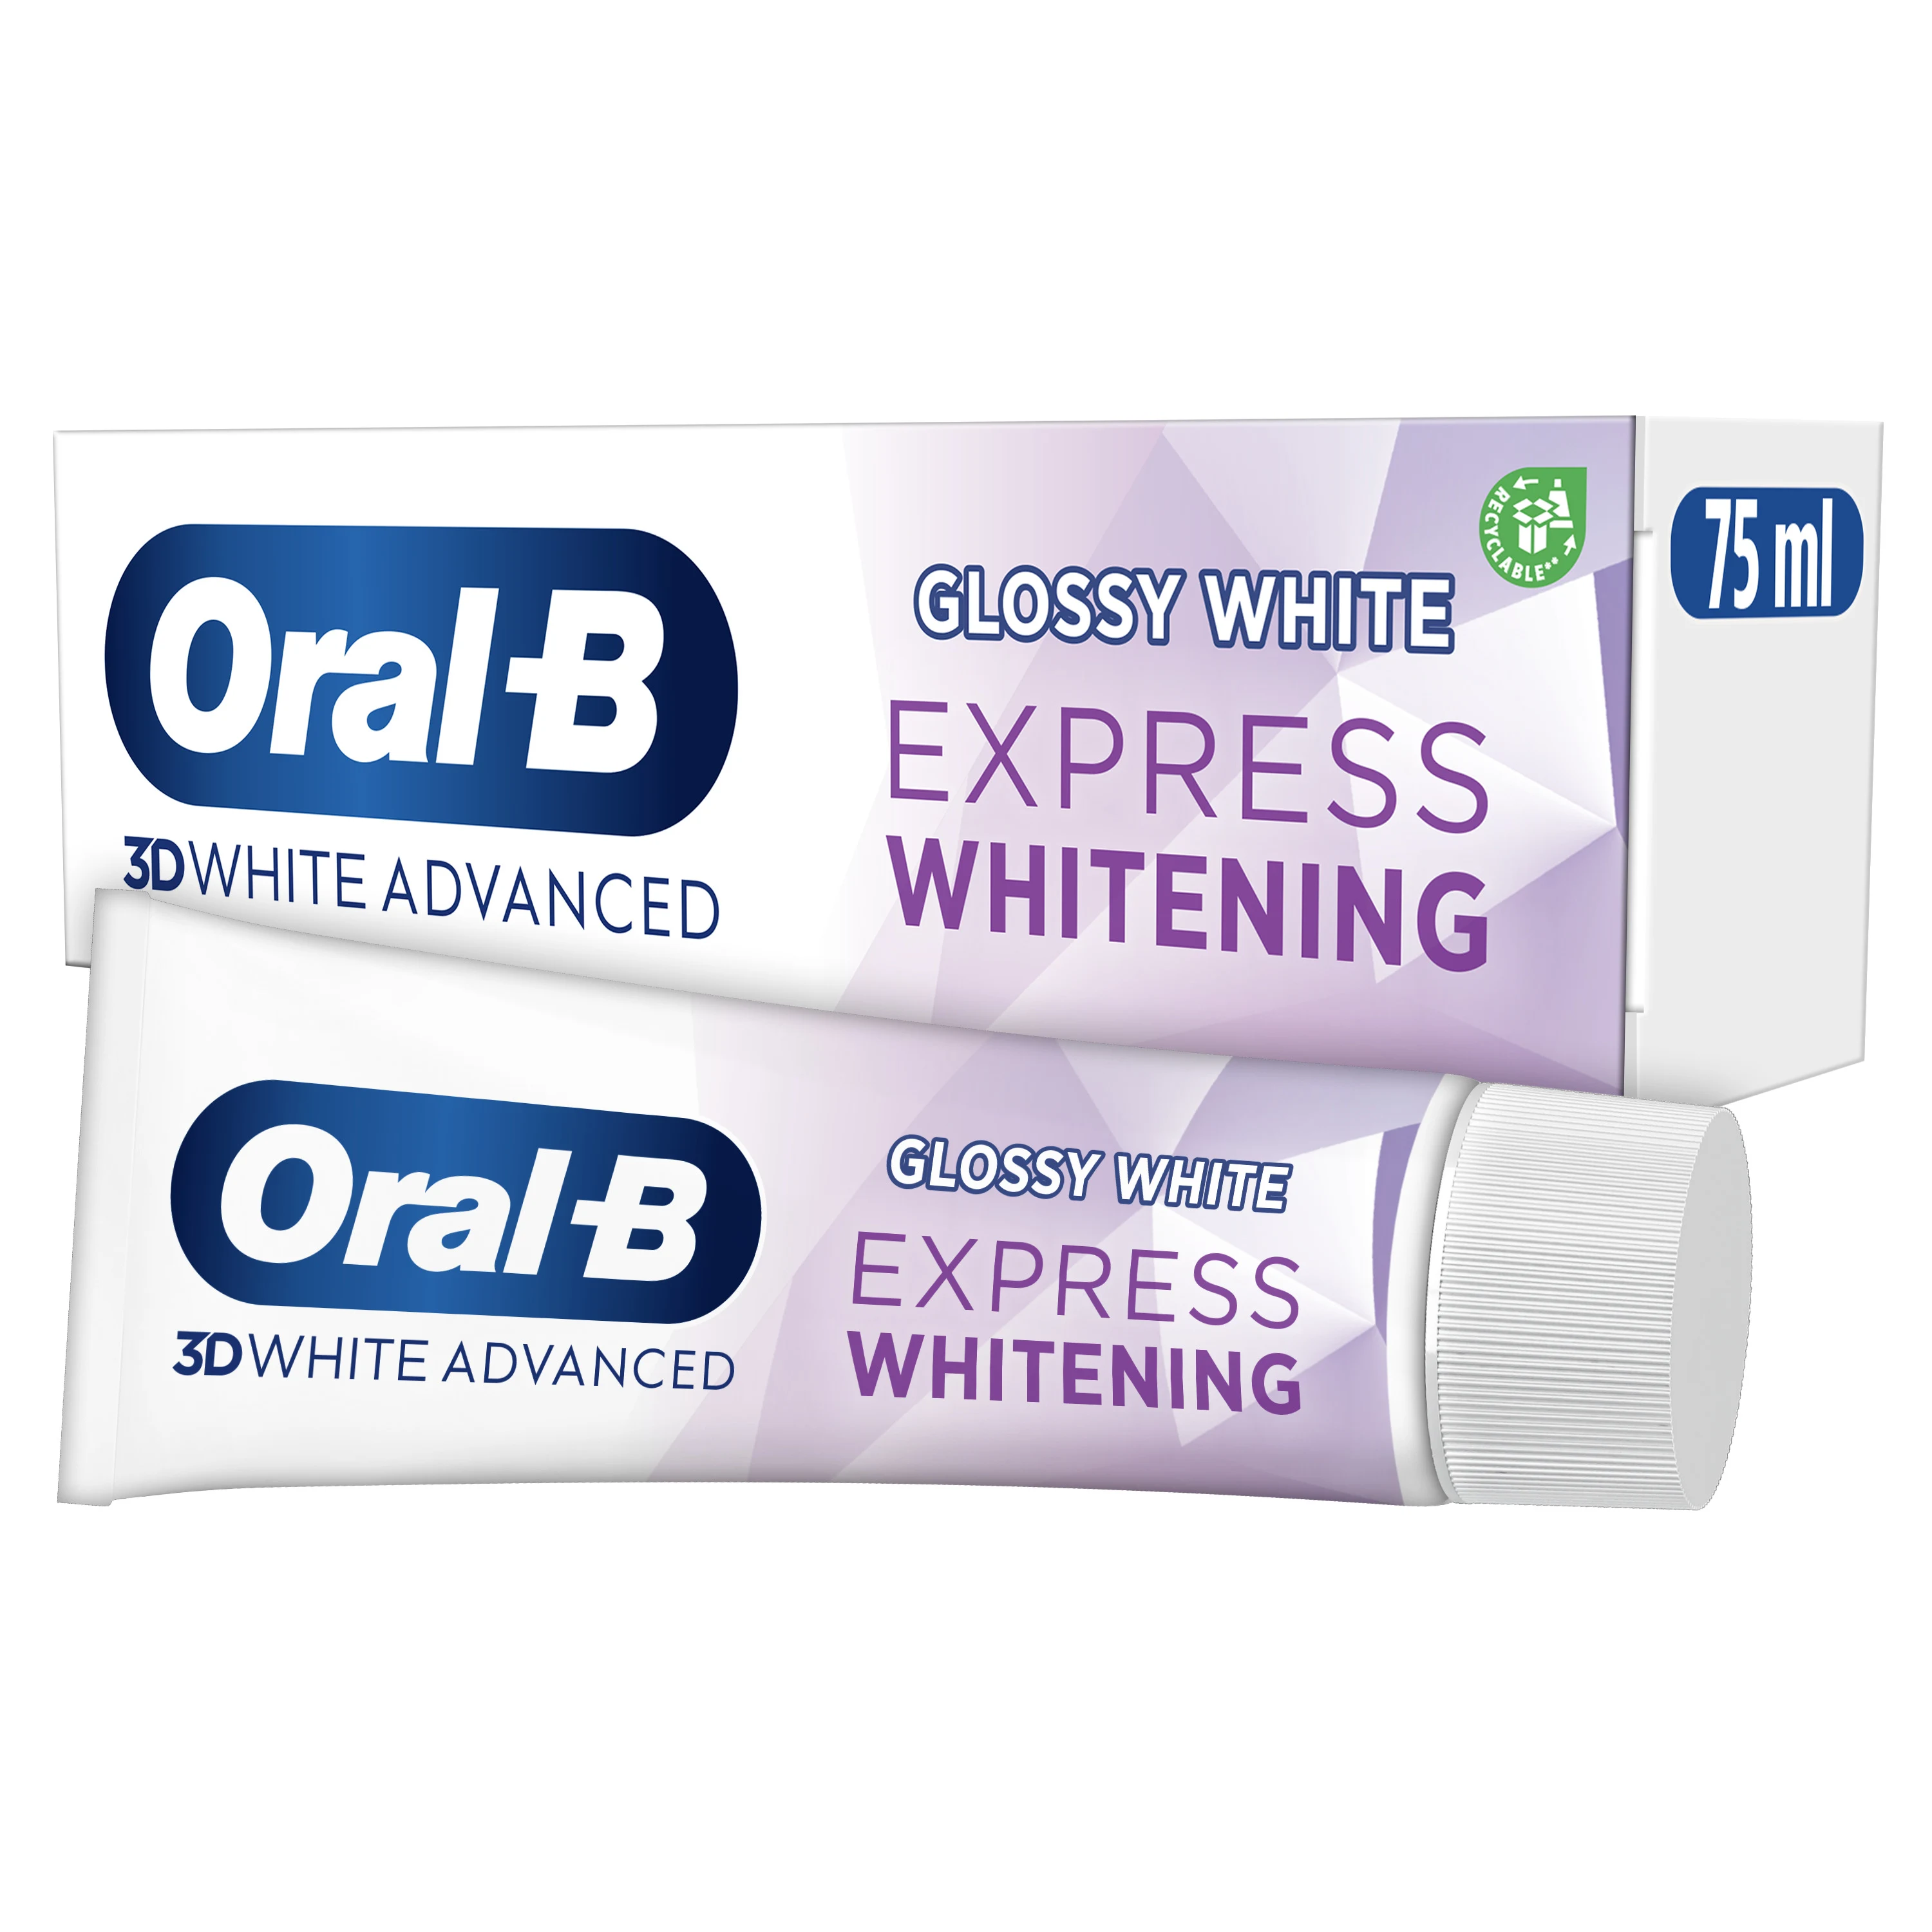 Oral-B 3D White Advanced Express Whitening Glossy White Toothpaste 75ml 